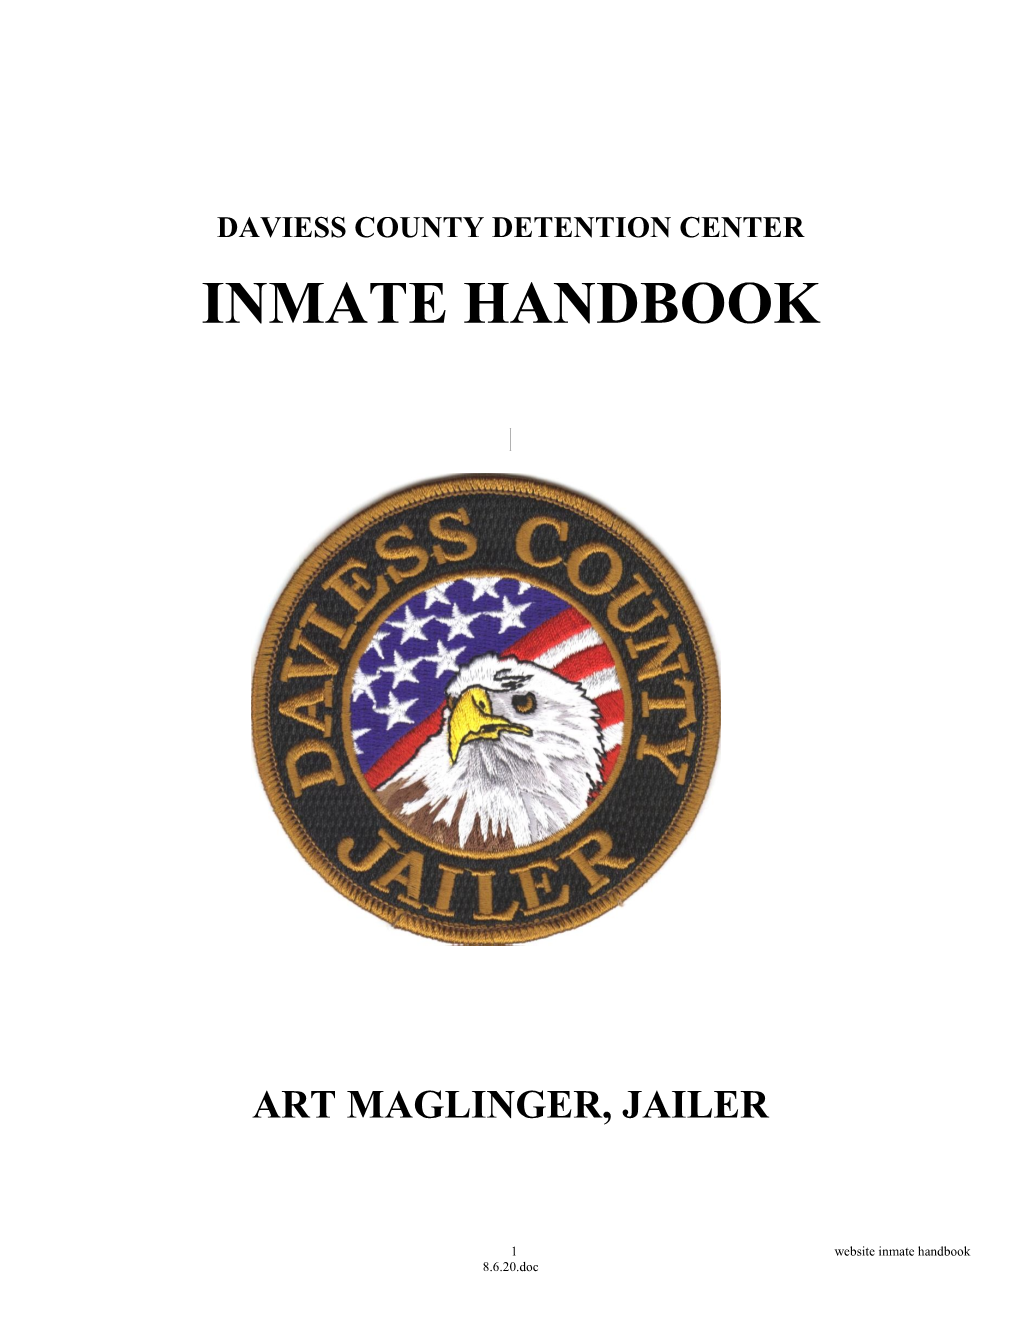 Inmate Handbook